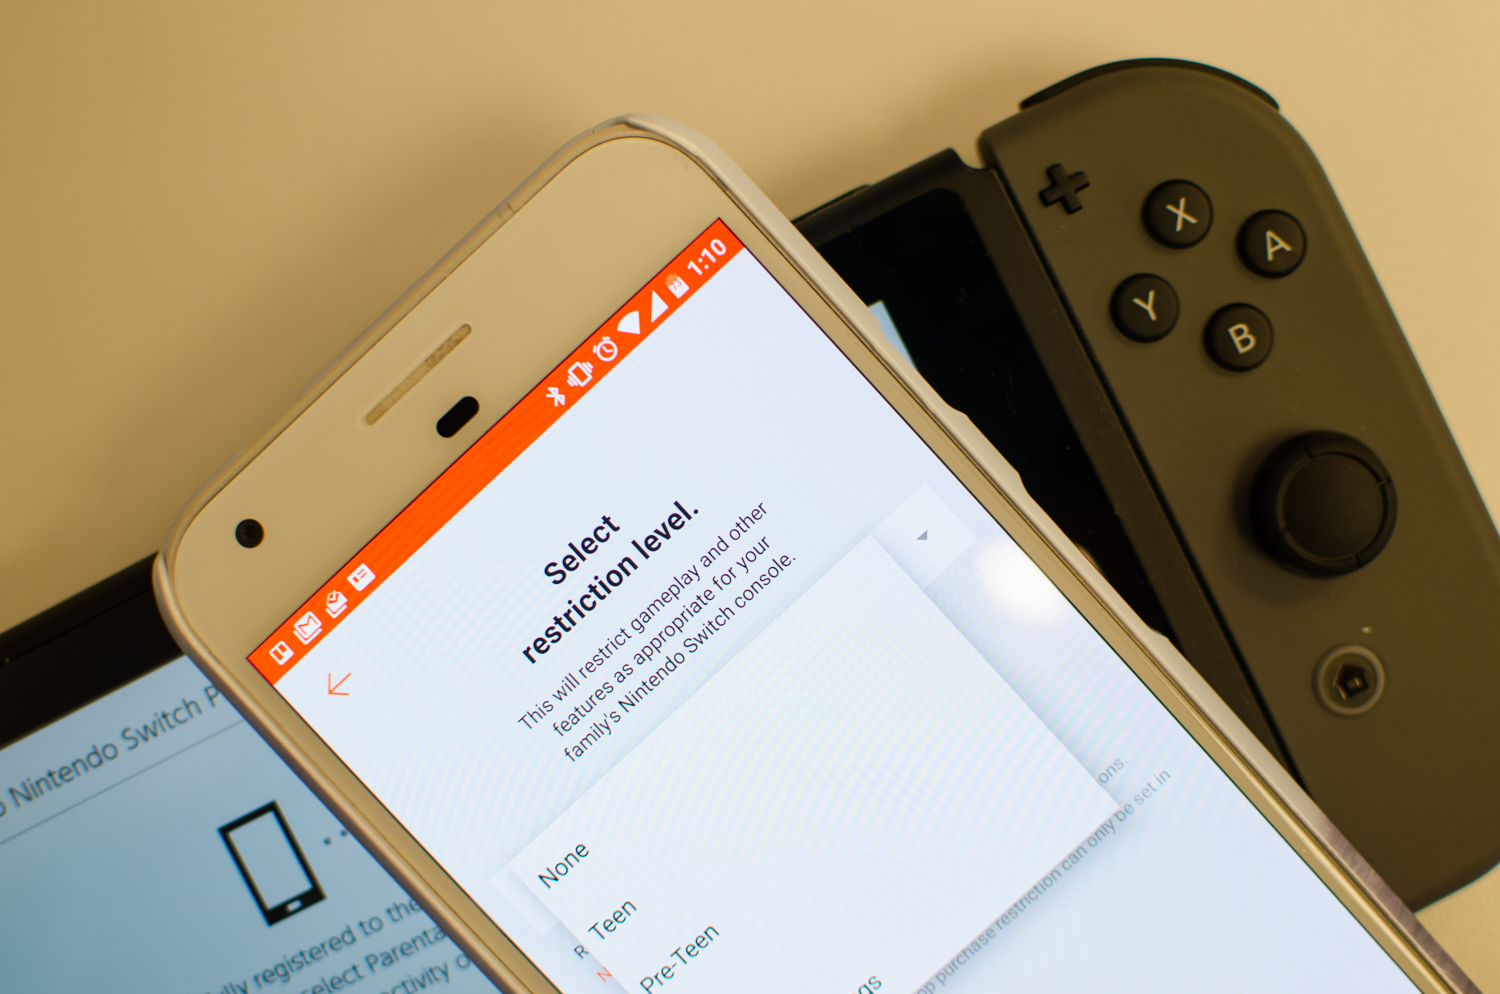 How To Set Up Nintendo Switch Parental Controls